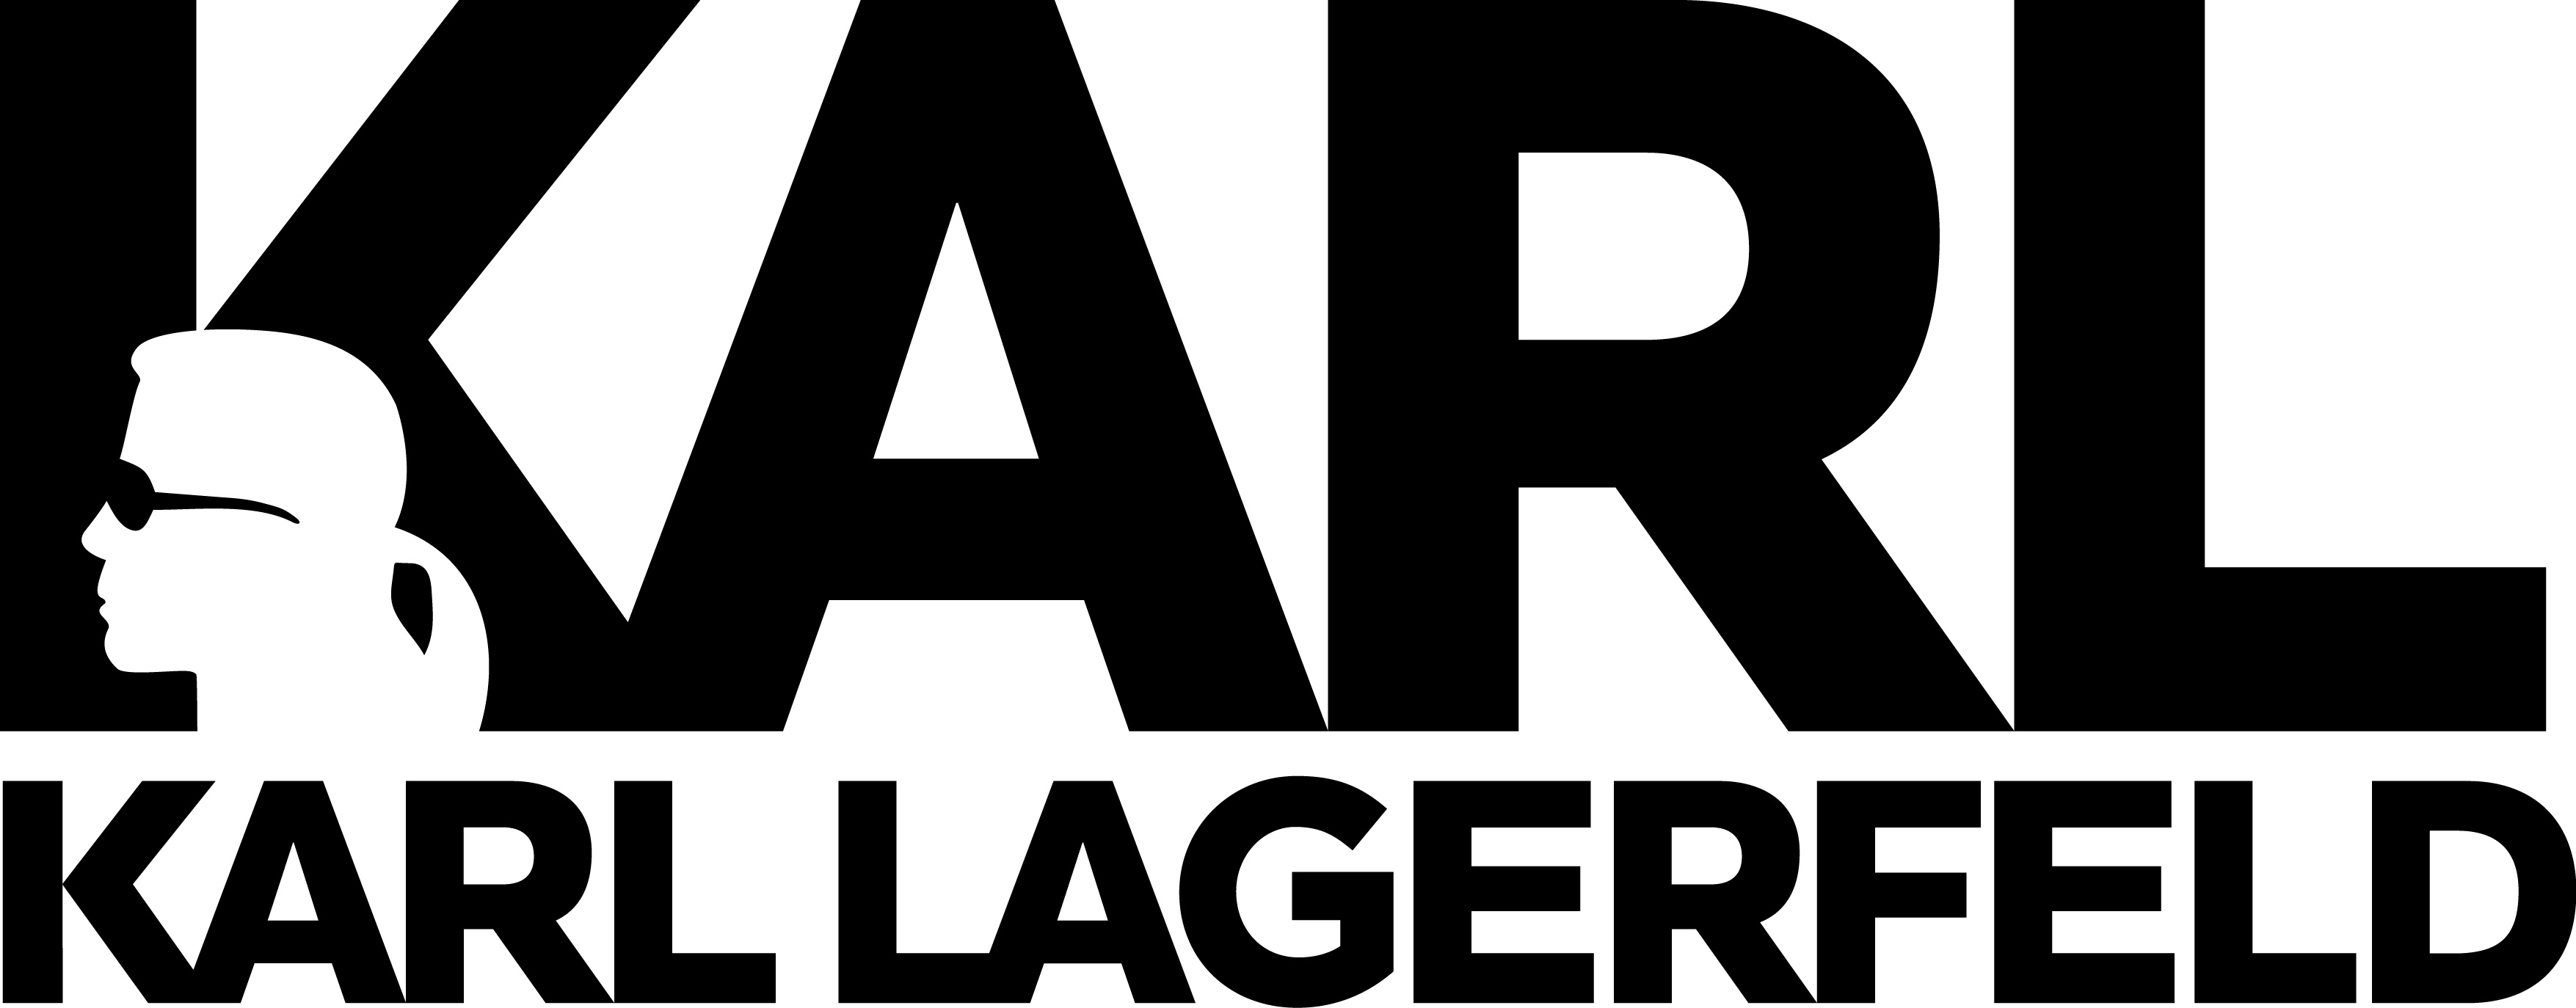 Karl Lagerfeld, Designer logo, Number 139, 3510x1380 Dual Screen Desktop